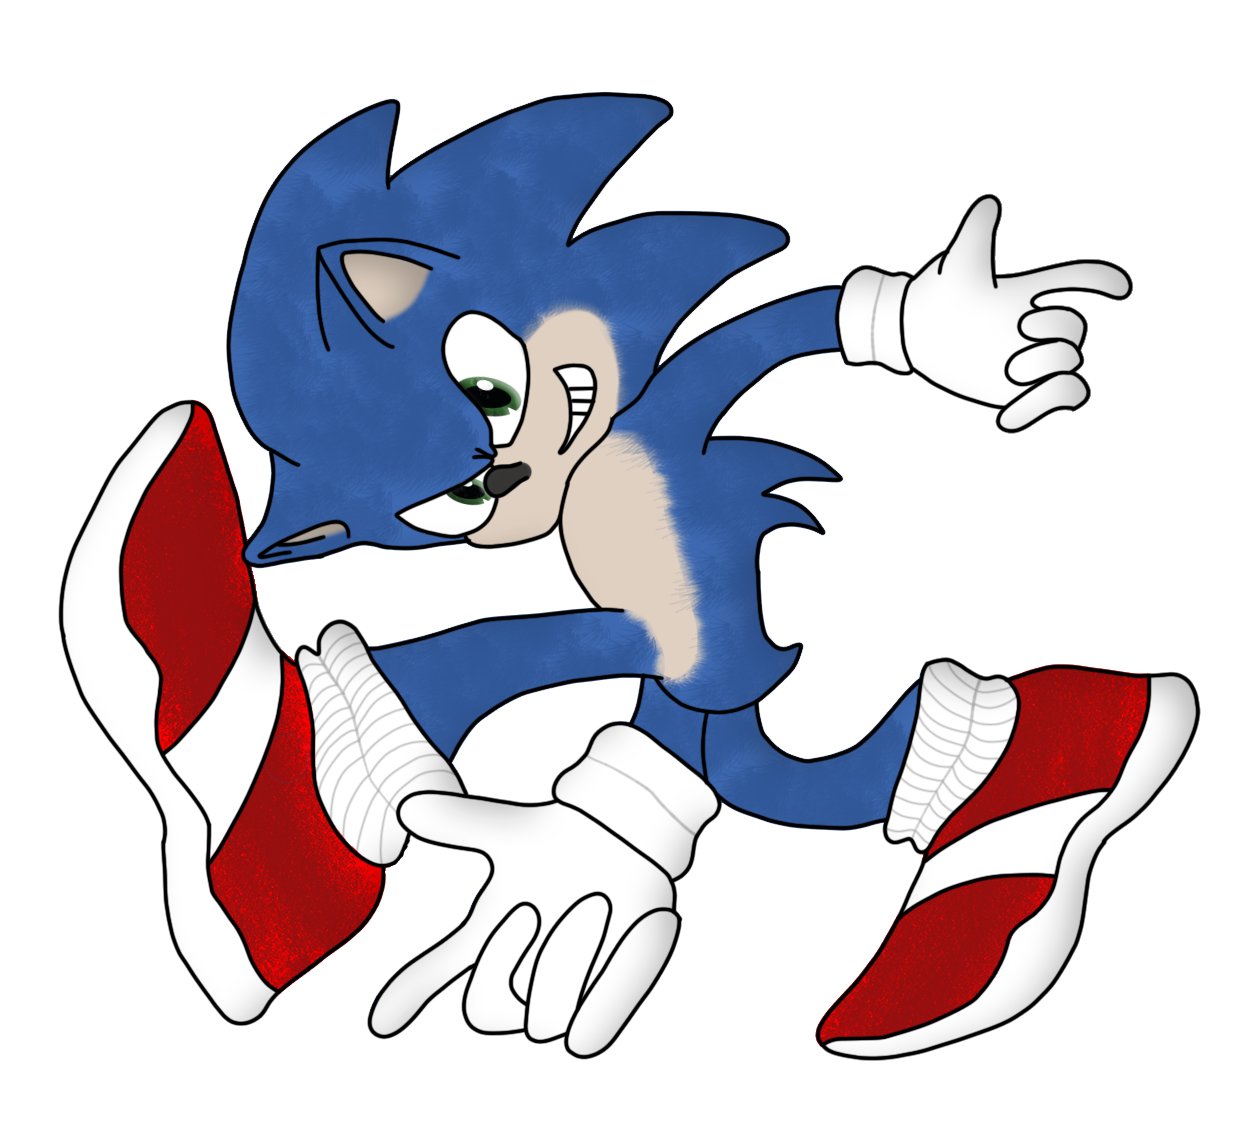 Movie Sonic in Adventure Style, Sonic Adventure Pose